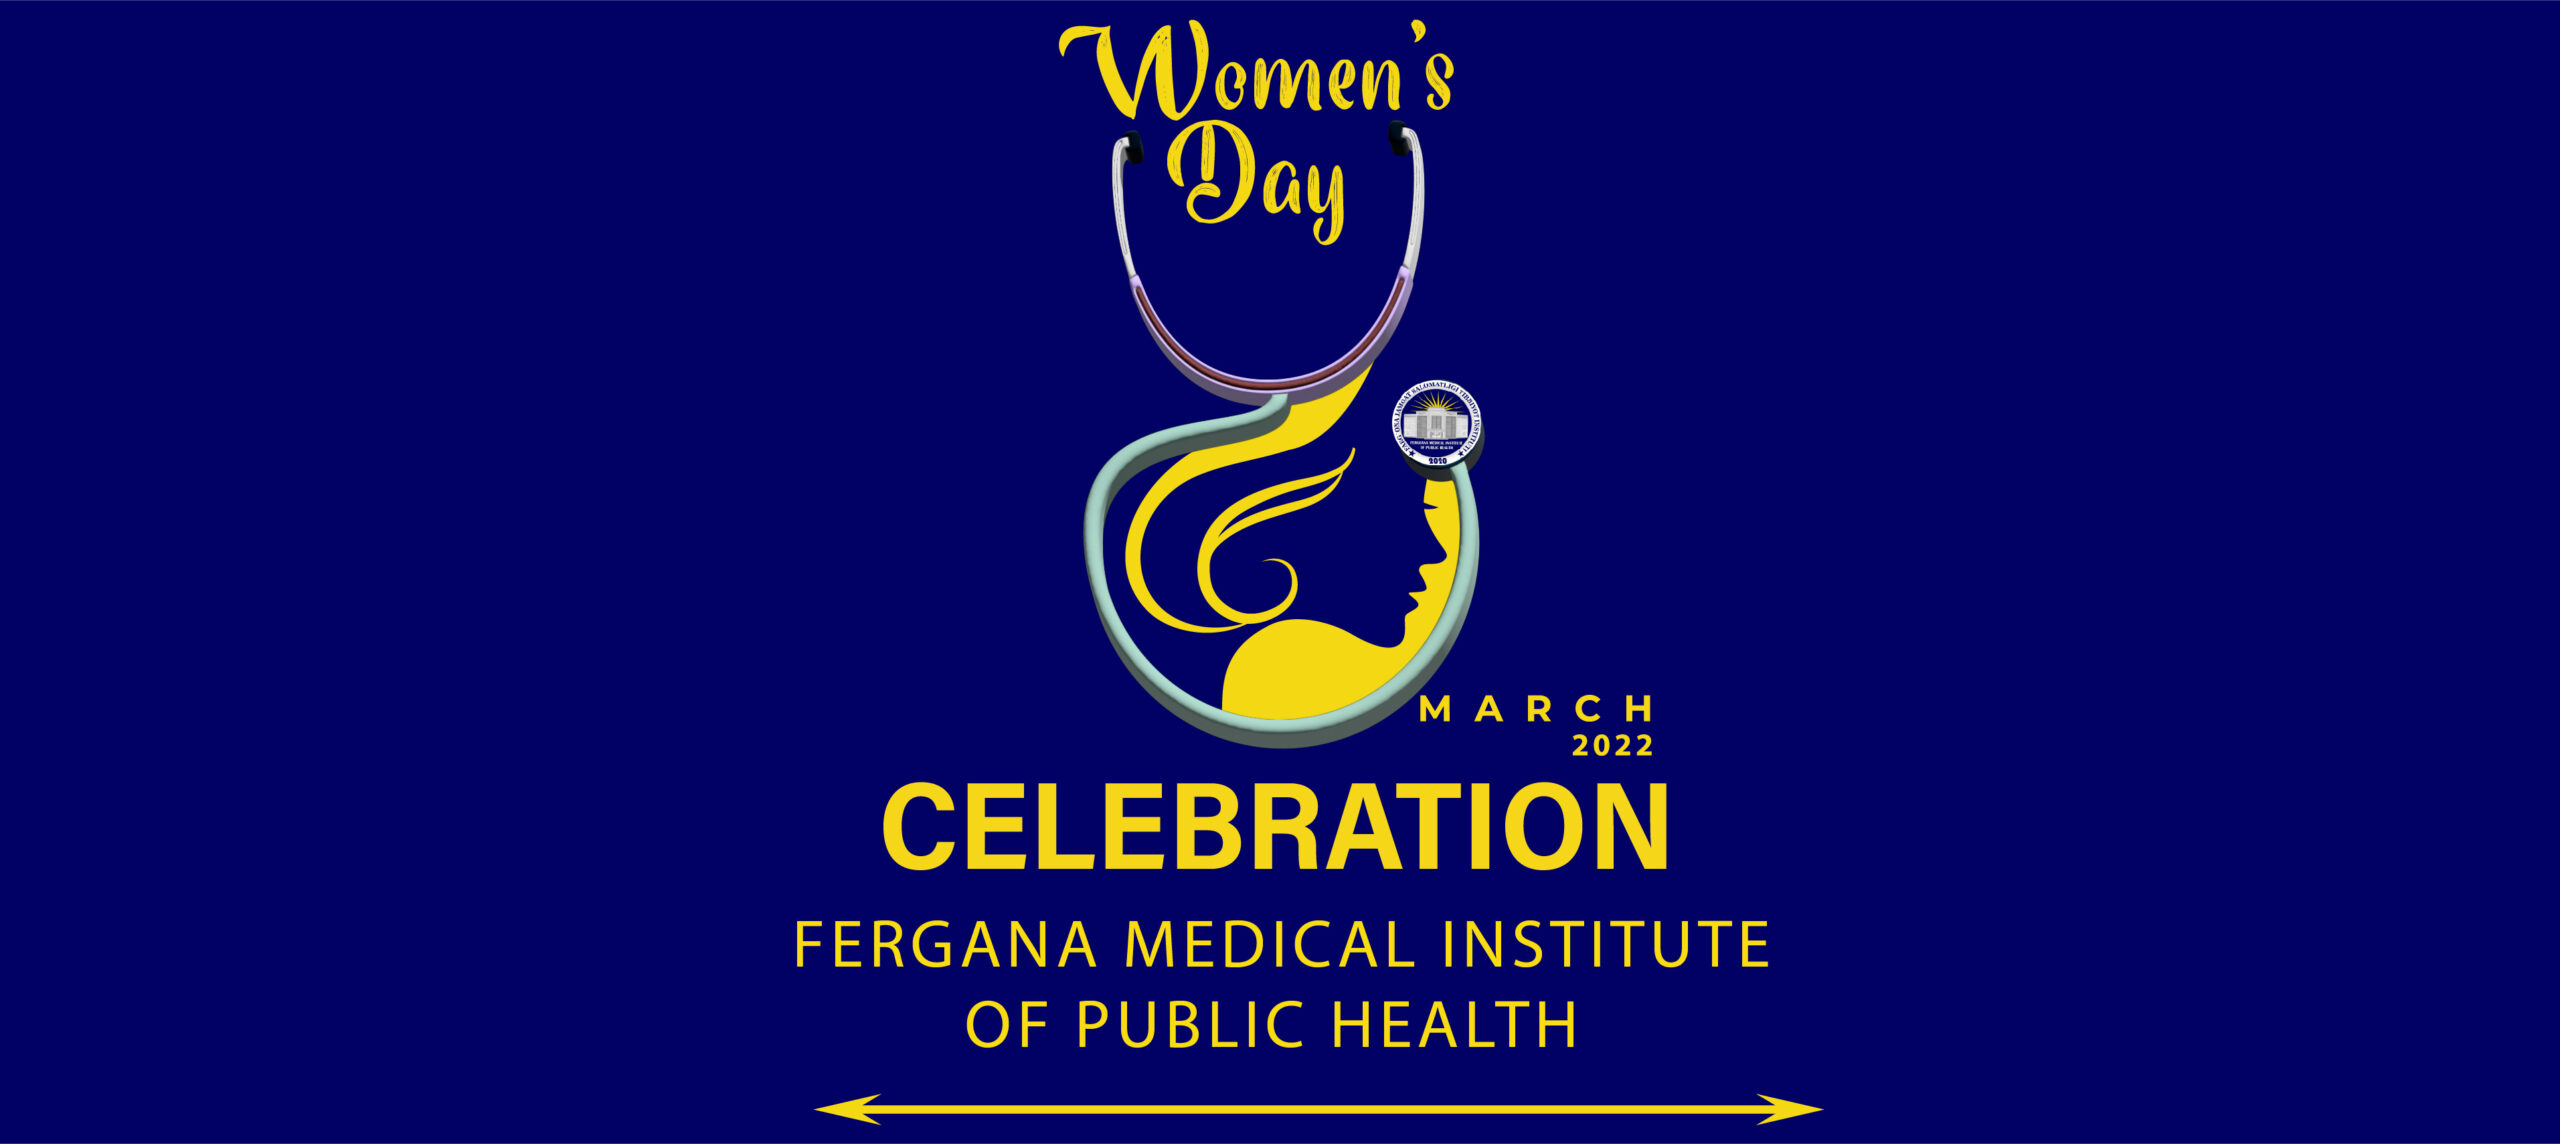 Women’s Day Celebration - Fergana medical institute of public health